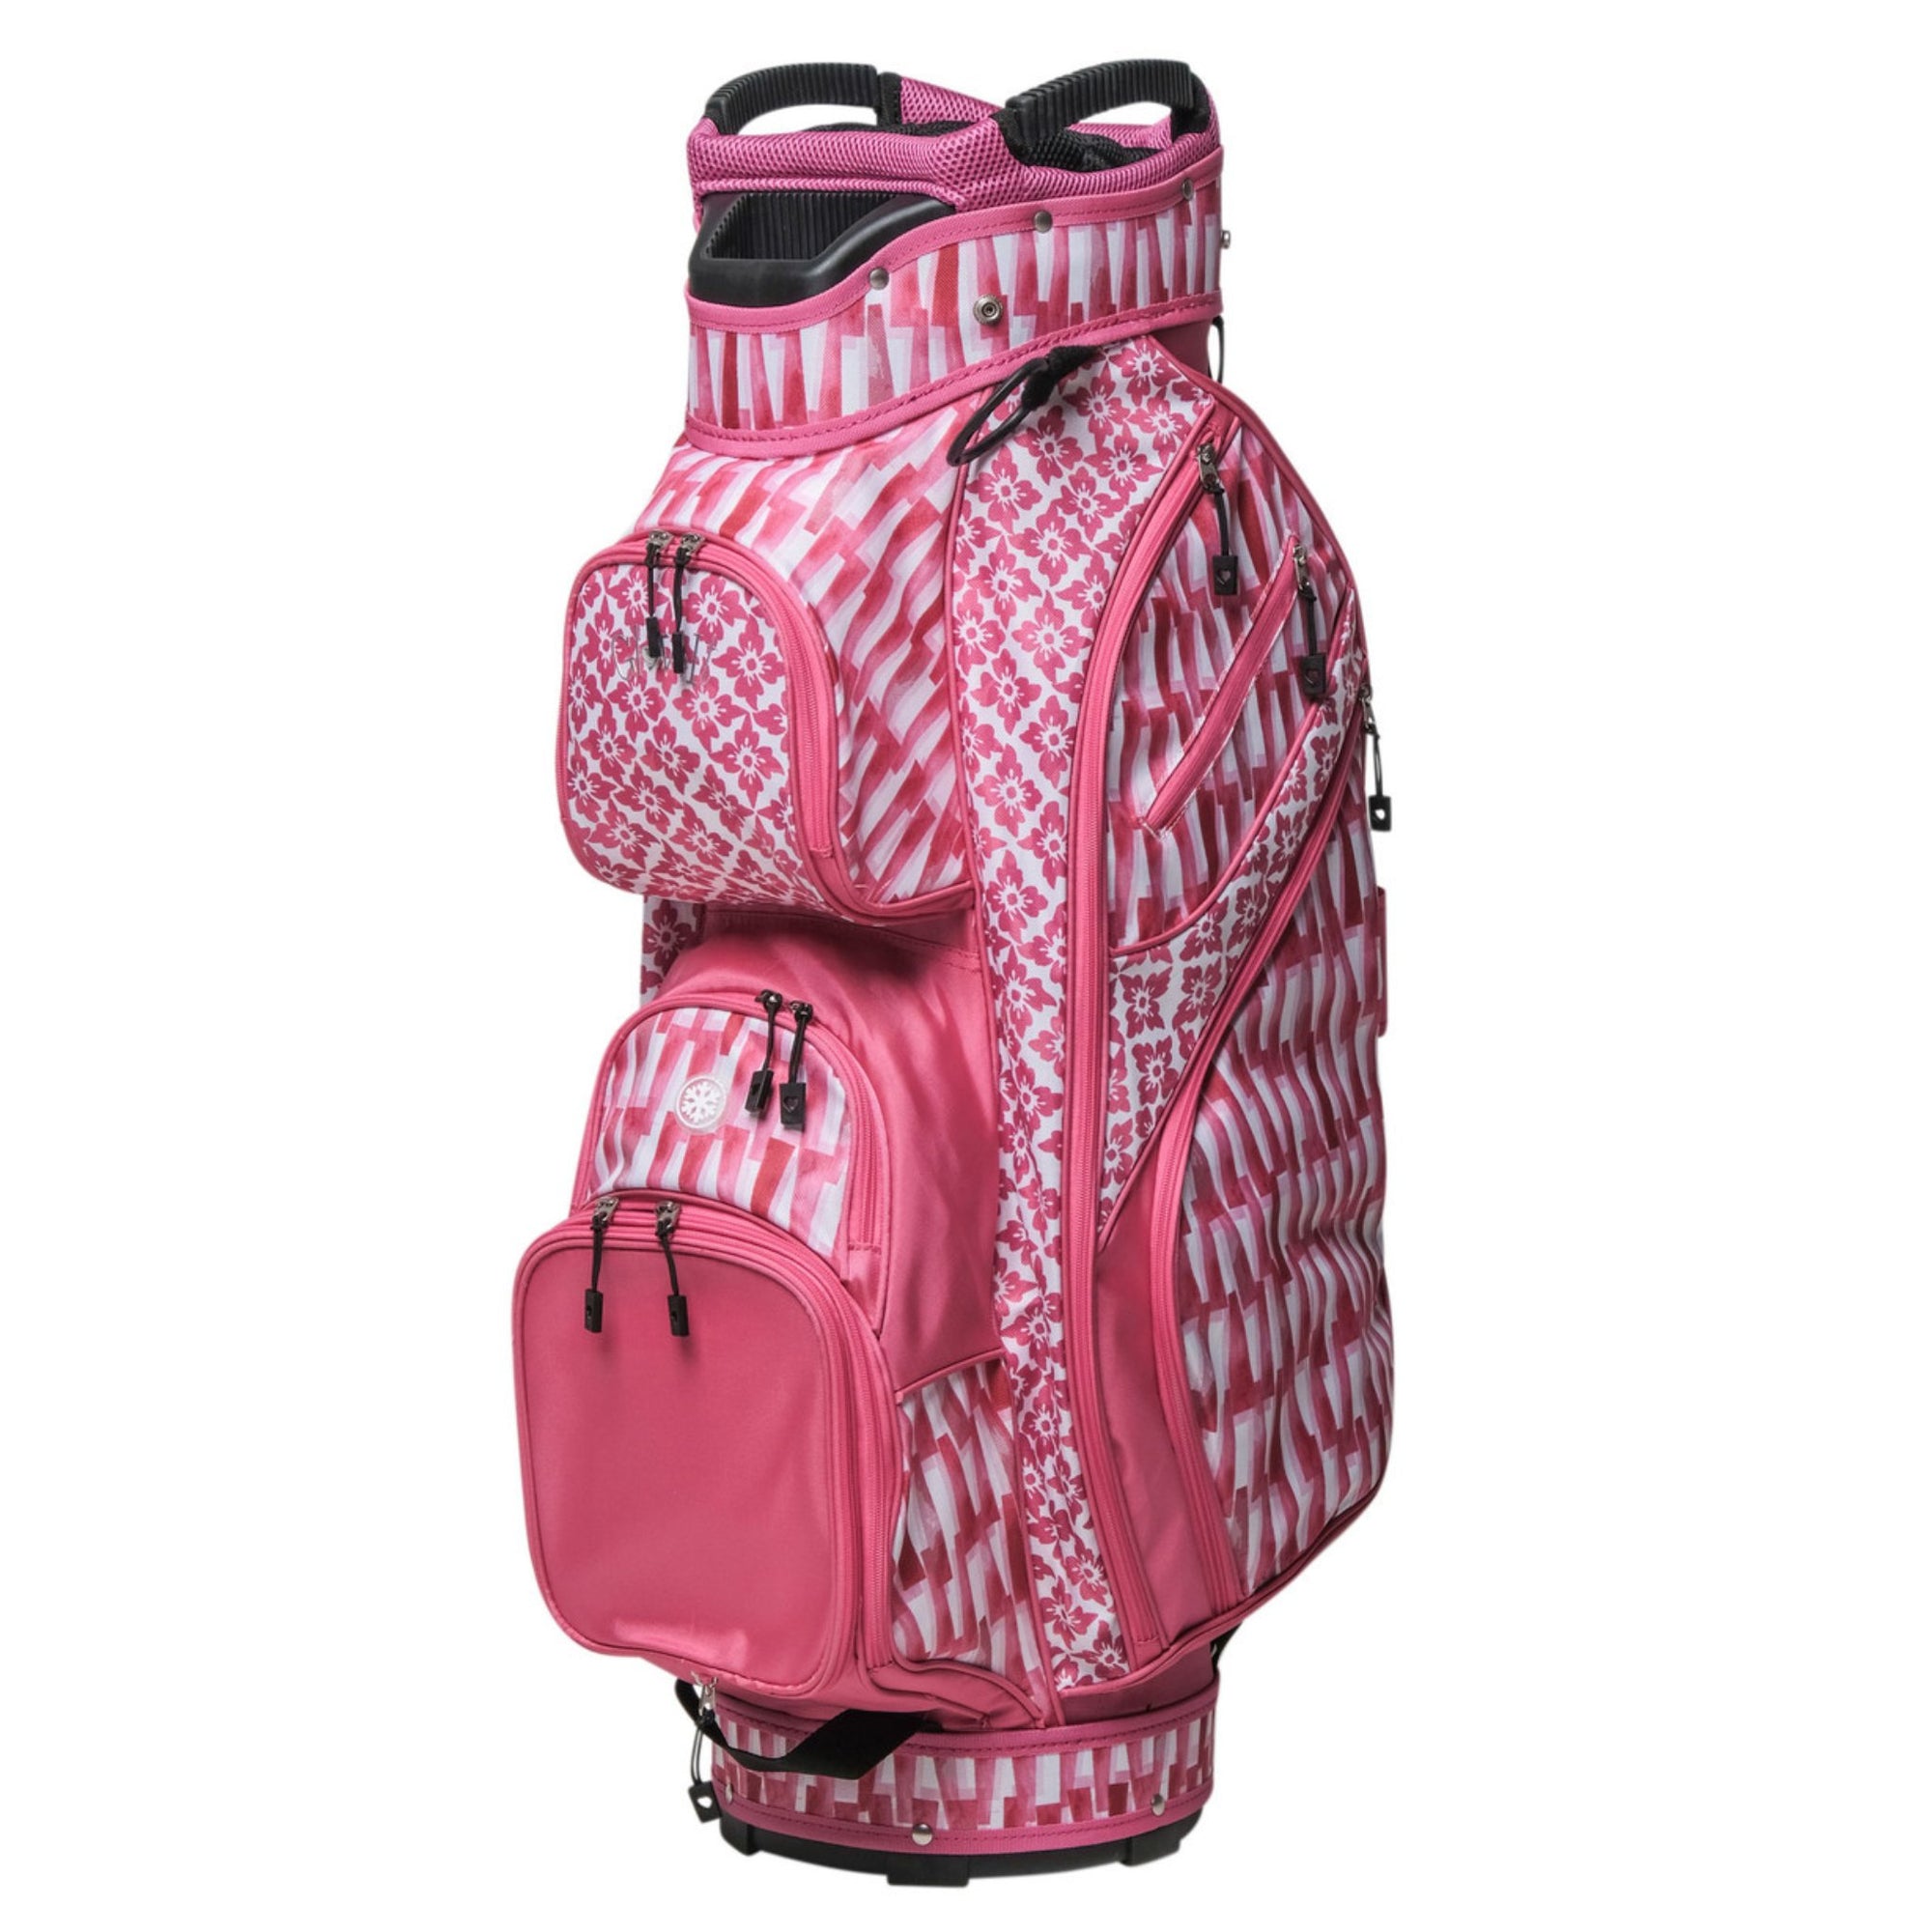 Bags | Fairway Fittings - Women's Golf & Athleisure Wear Boutique.